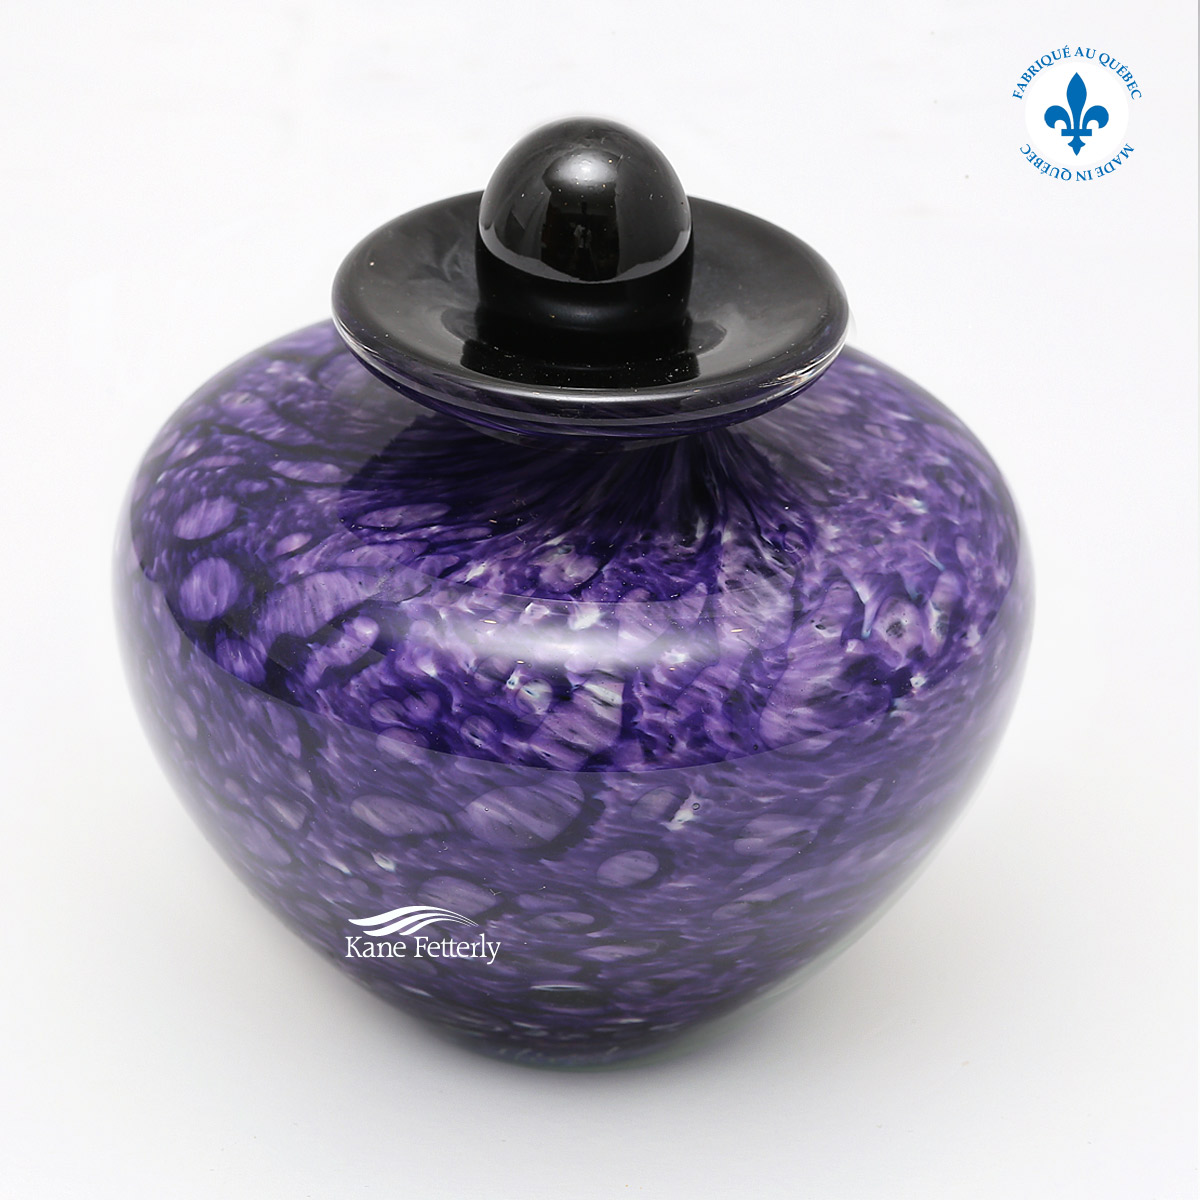 Violet glass miniature urn